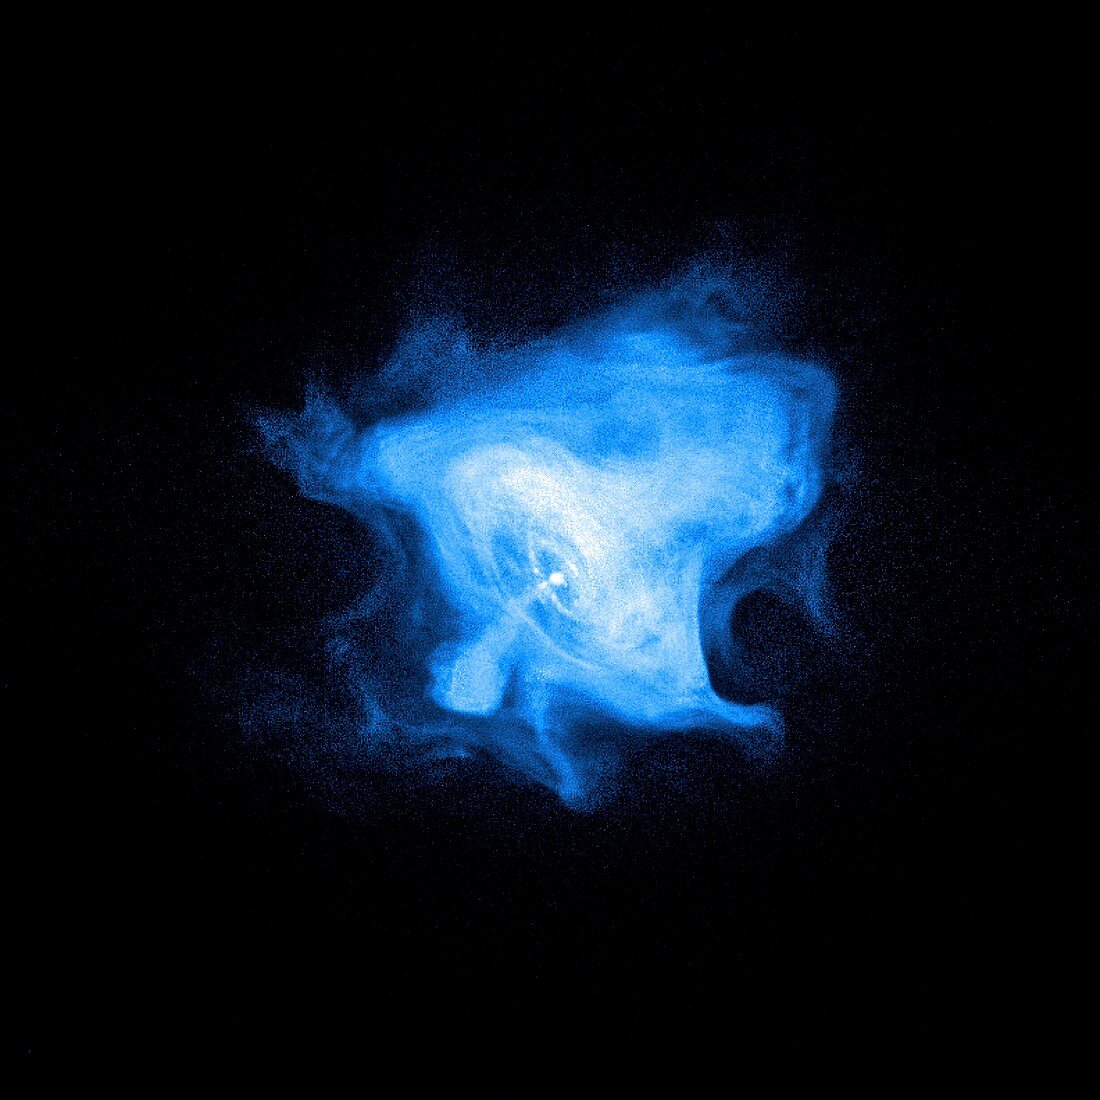 Crab nebula,X-ray image